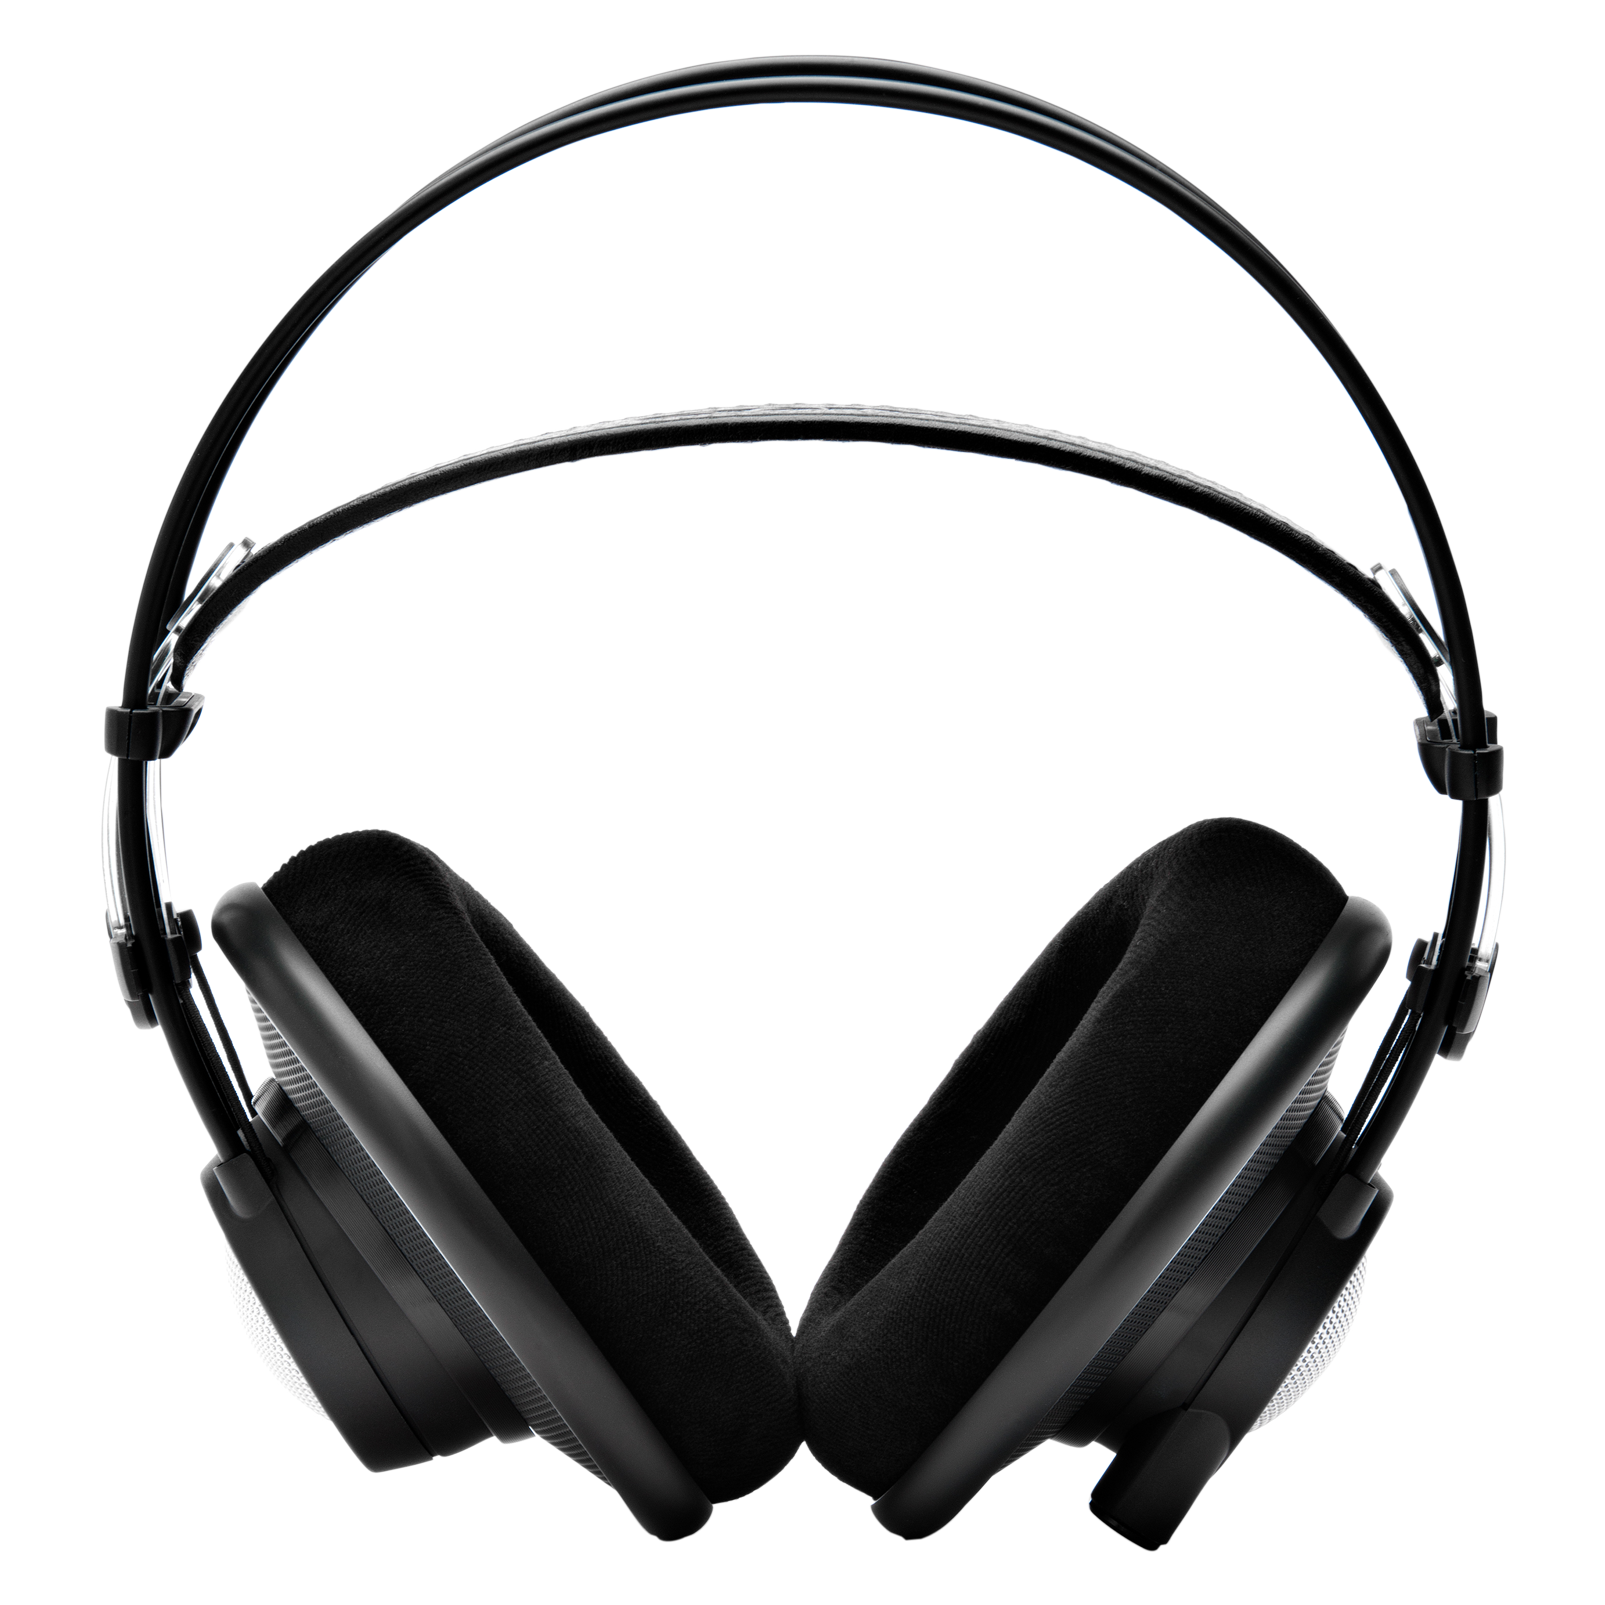 K702 (B-Stock) - Black - Reference studio headphones - Front